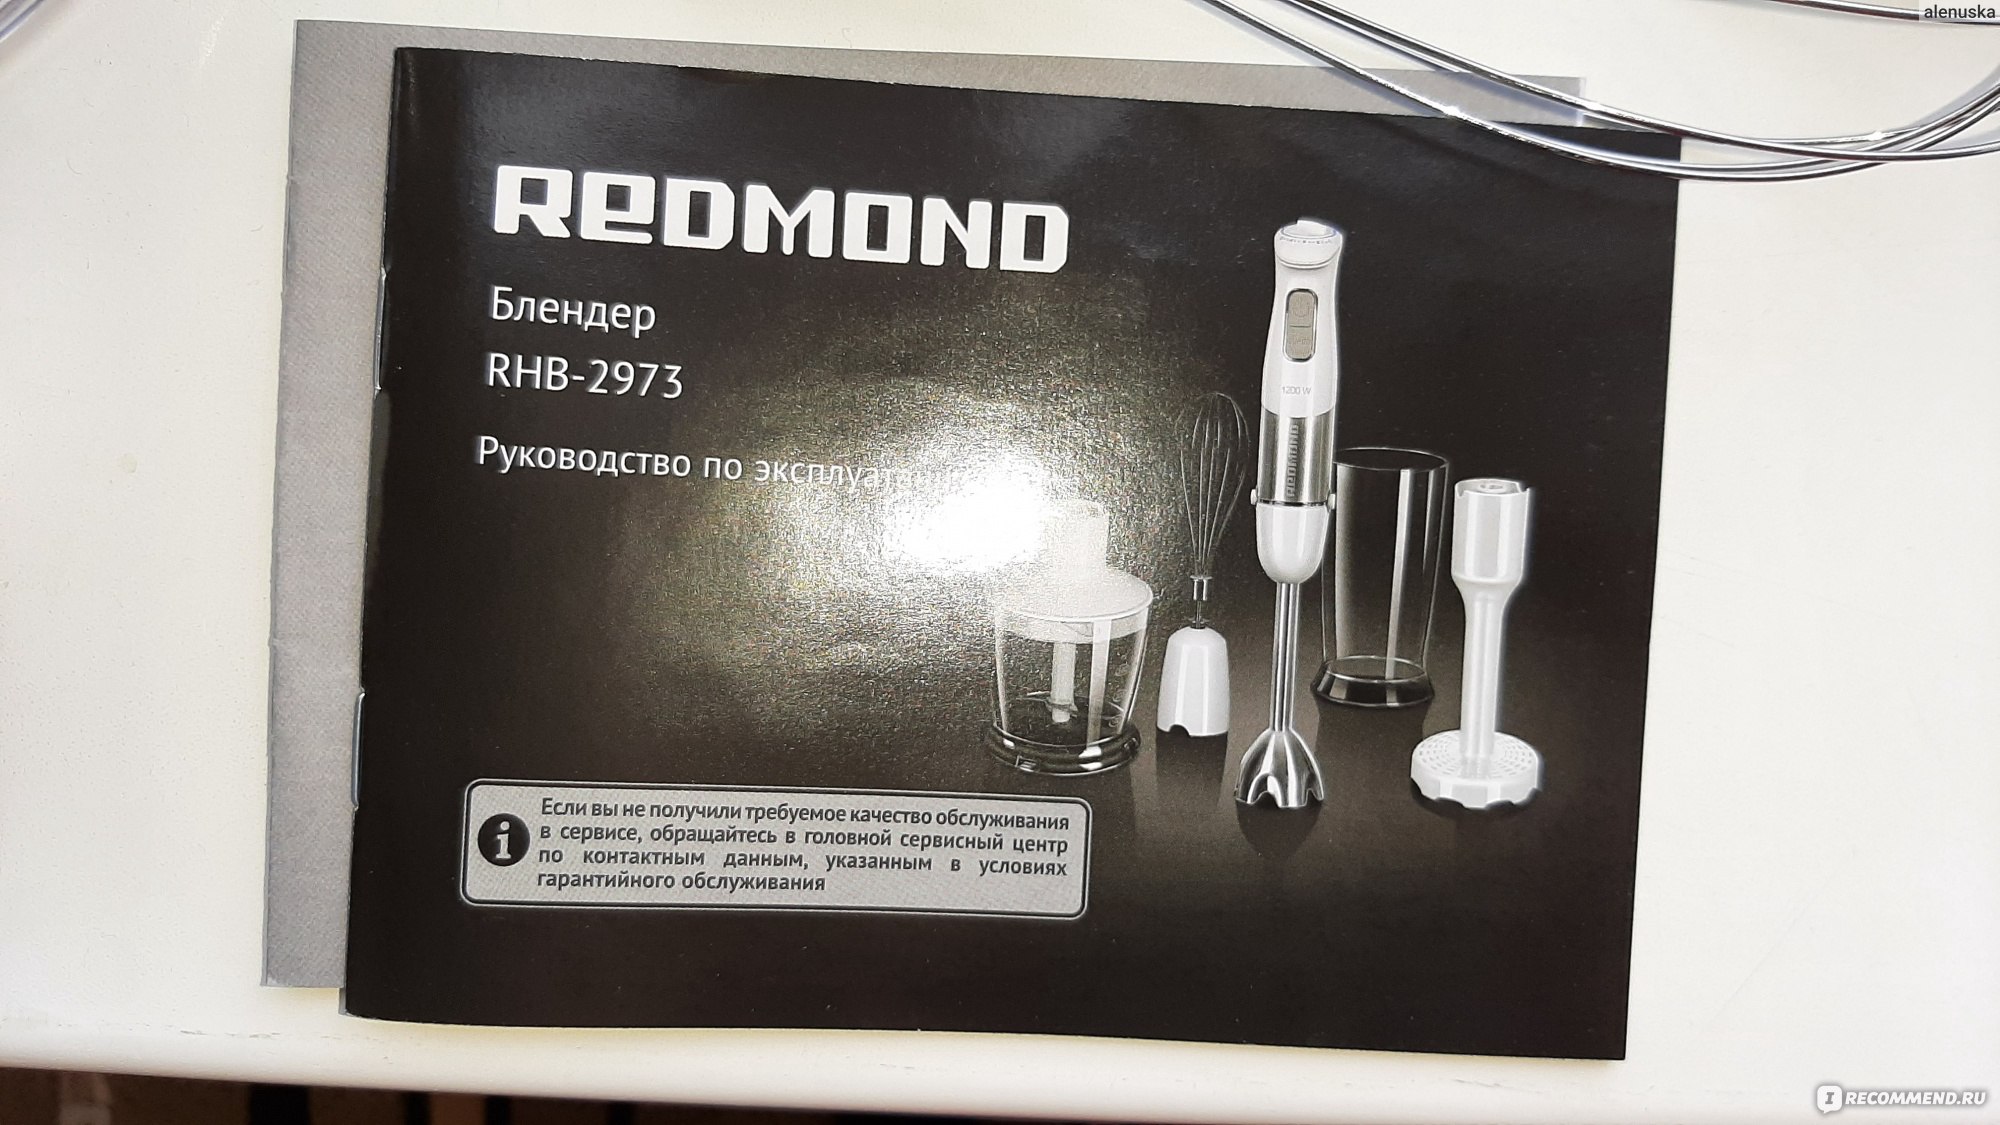 Redmond rhb 2973. RHB-2973. Redmond RHB-2982. Кнопка для блендера Redmond RHB-2973. Блендера Philips HR 1637.